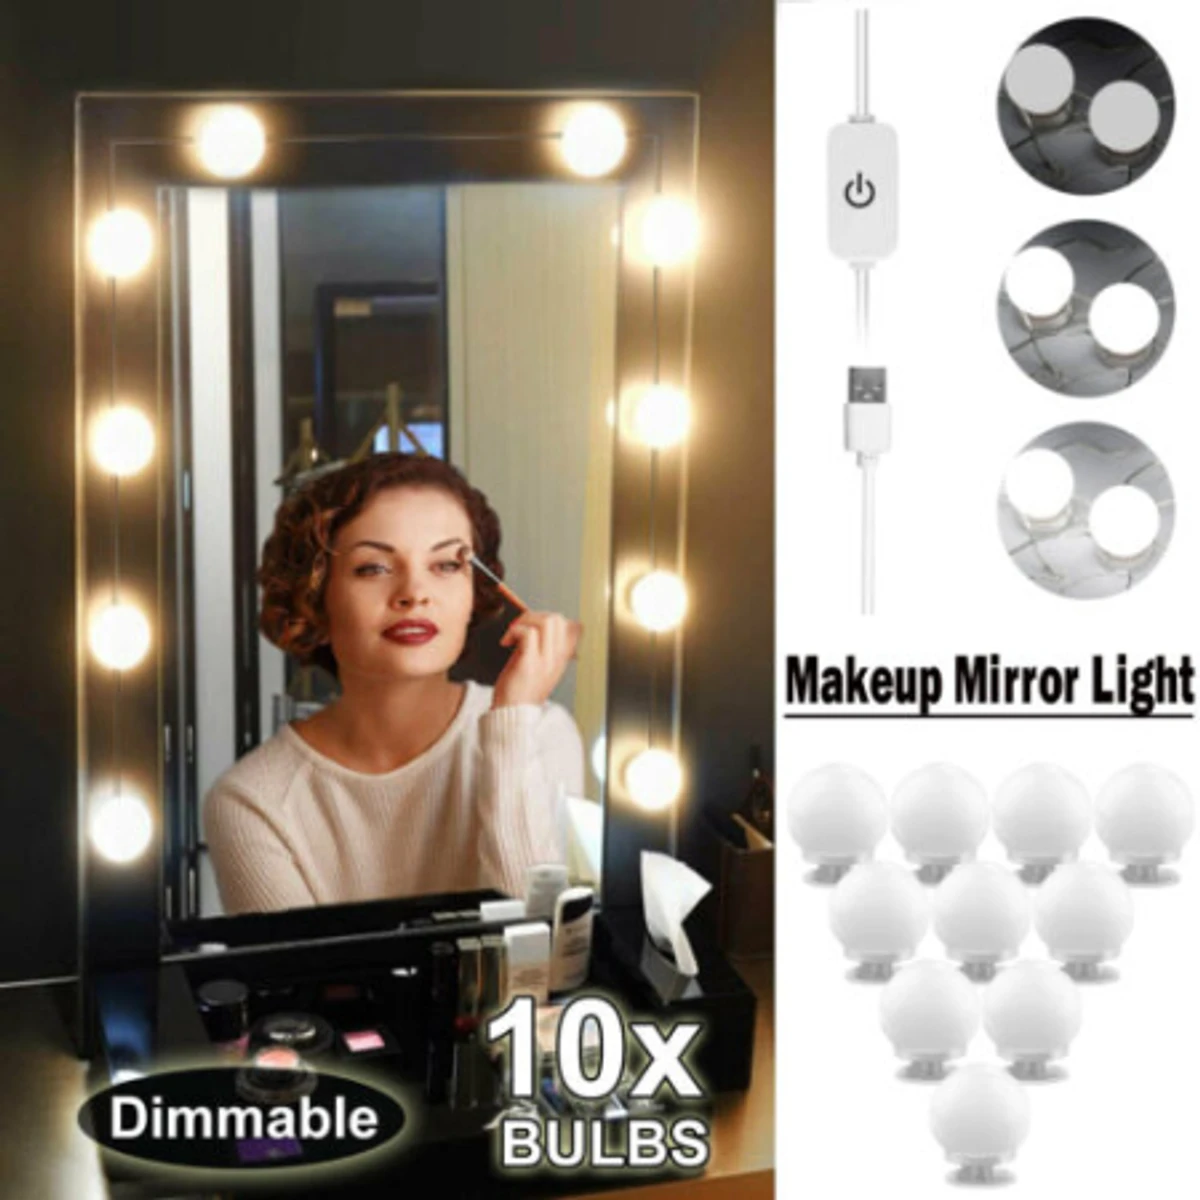 Makeup Mirror LED Light Bulbs